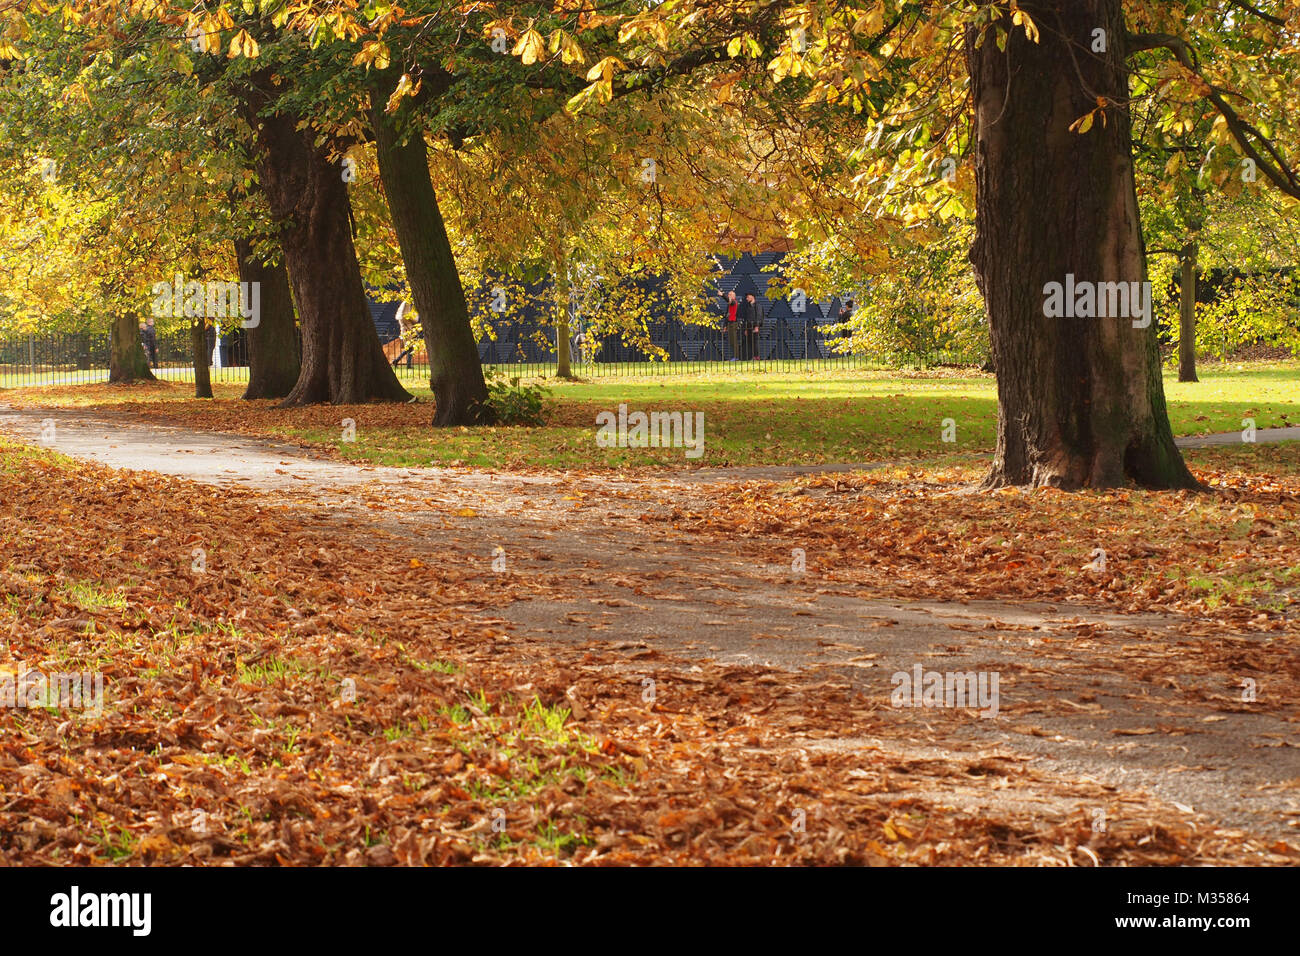 People enjoying walking in the autumn sunshine in Hyde Park, London Stock Photo